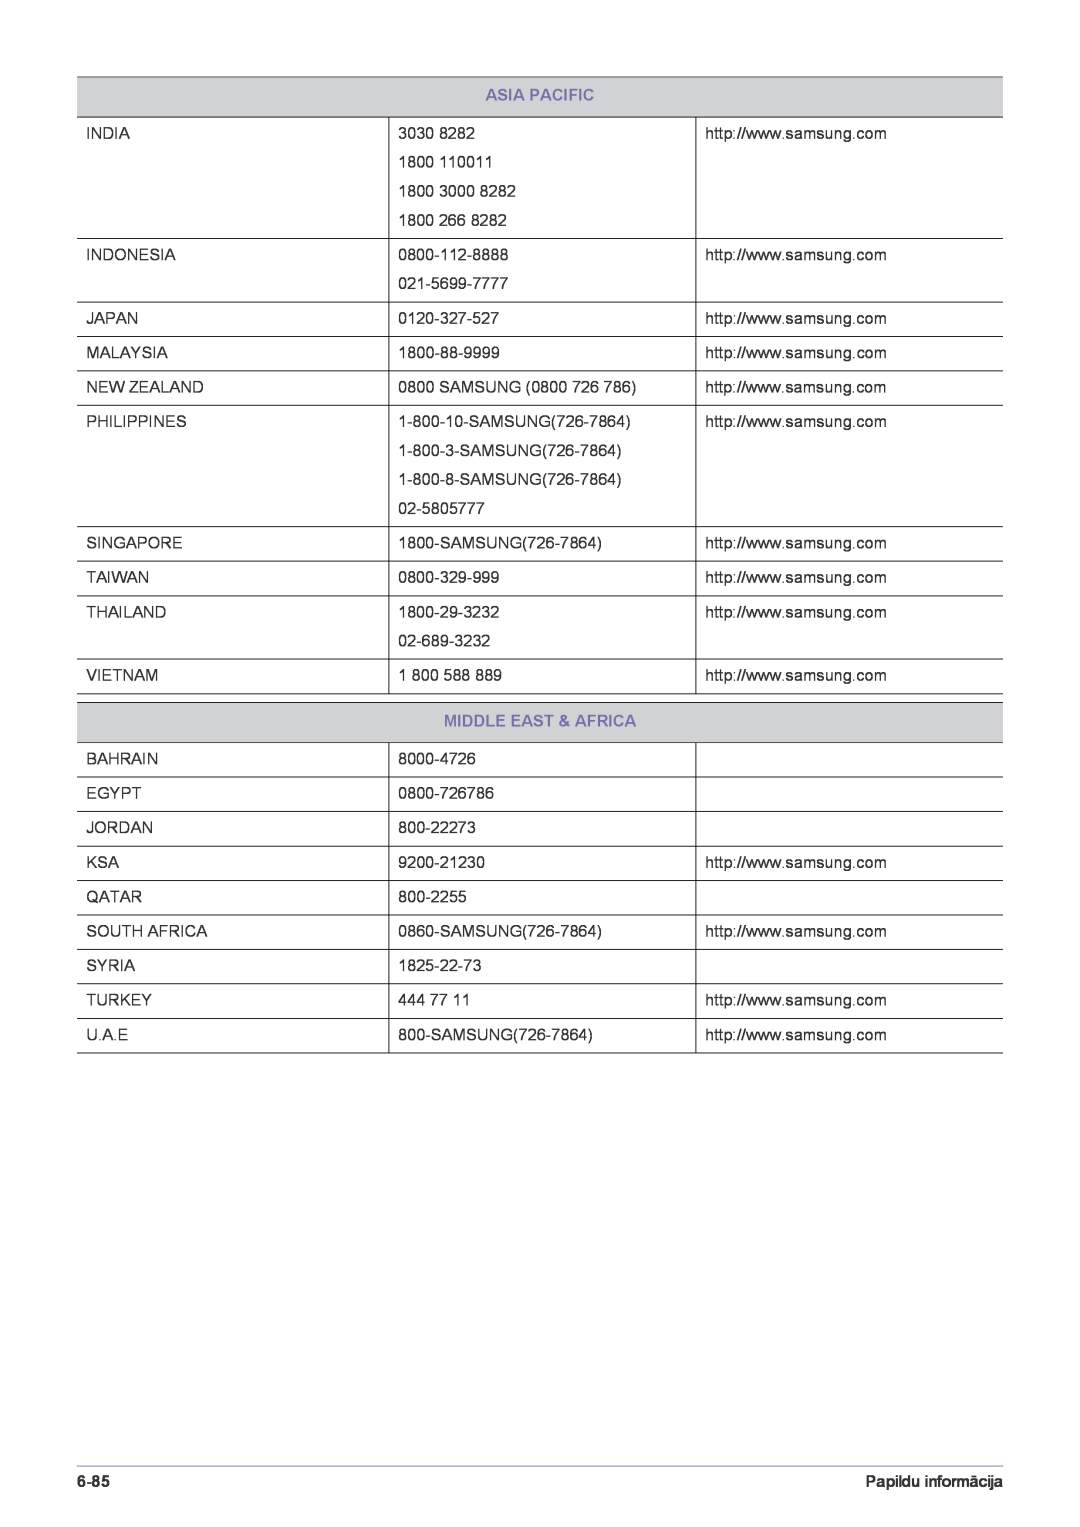 Samsung LS19CLASBUEN, LS20CLYSB/EN, LS22CBUMBV/EN, LS19CLYSBUEN manual Asia Pacific, Middle East & Africa, Papildu informācija 